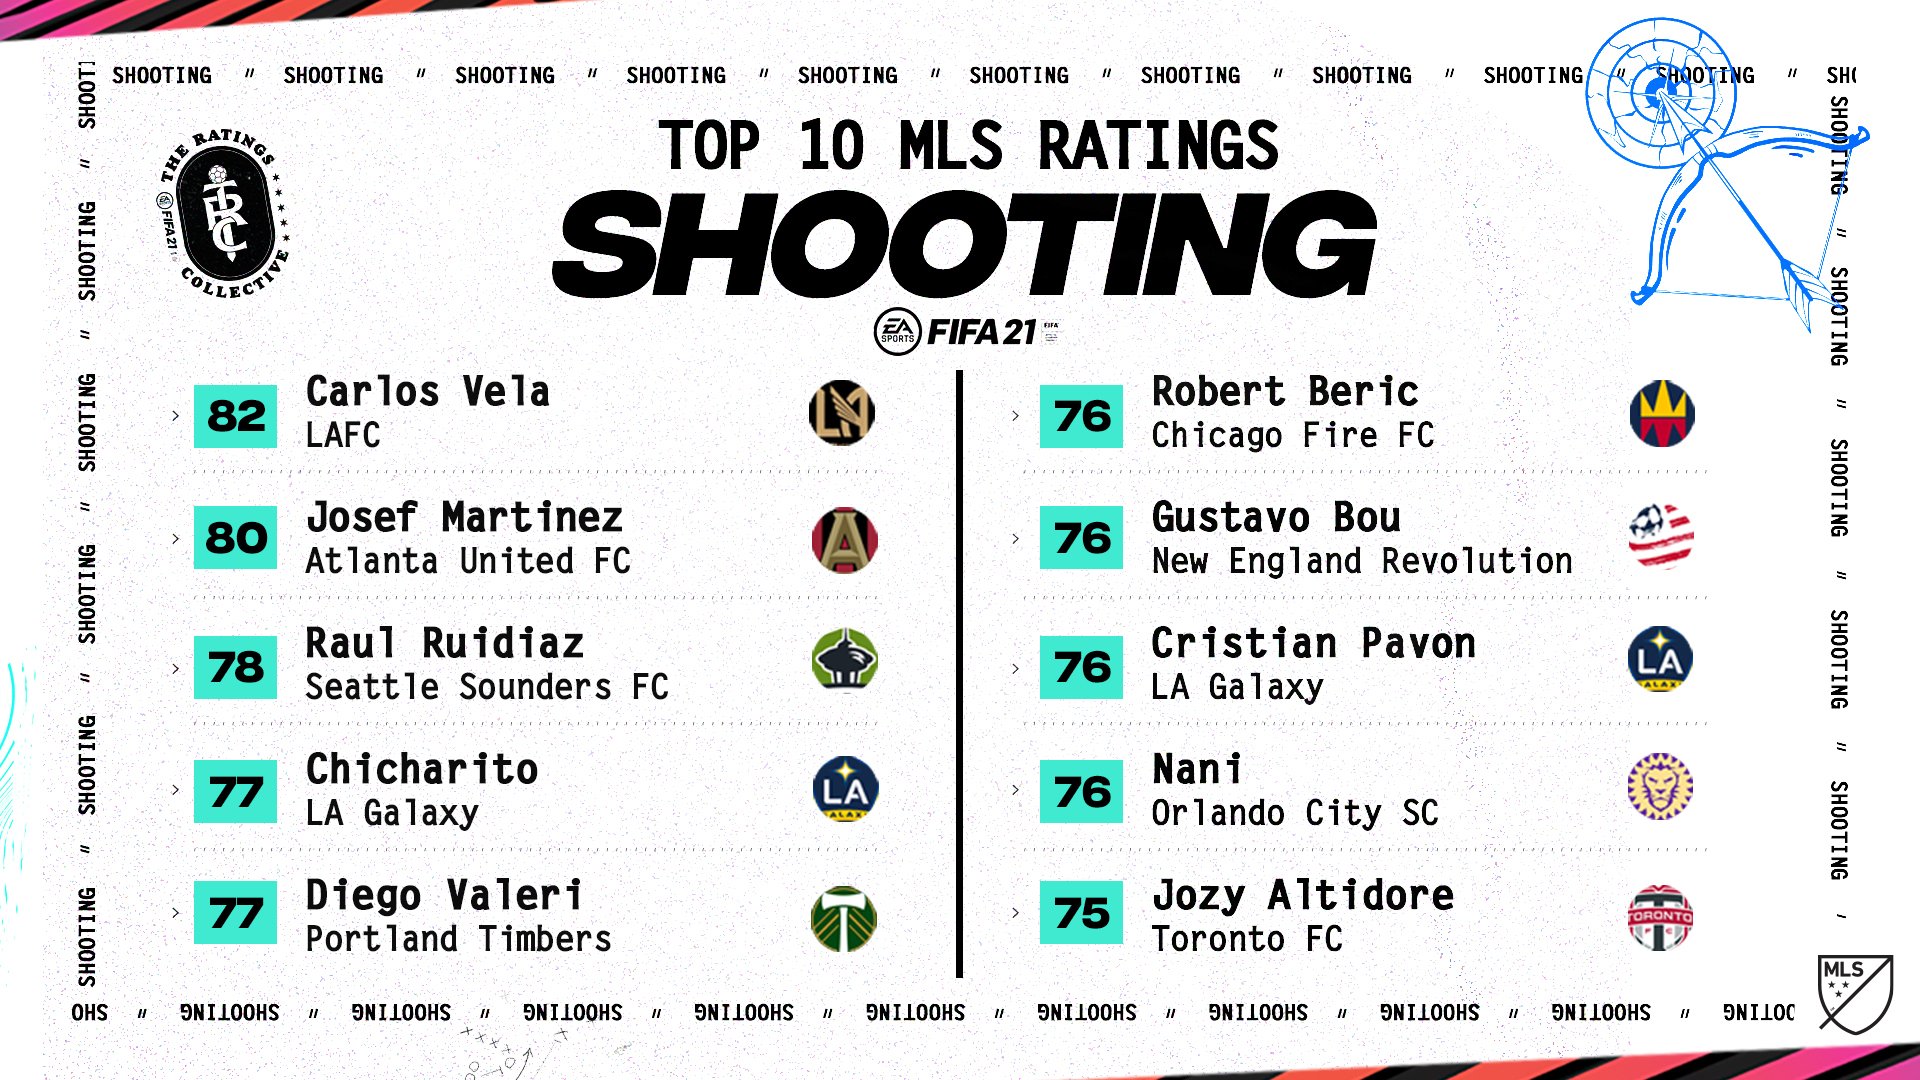 FIFA 21 ratings: LAFC's Carlos Vela, Inter Miami's Blaise Matuidi rated  highest MLS players